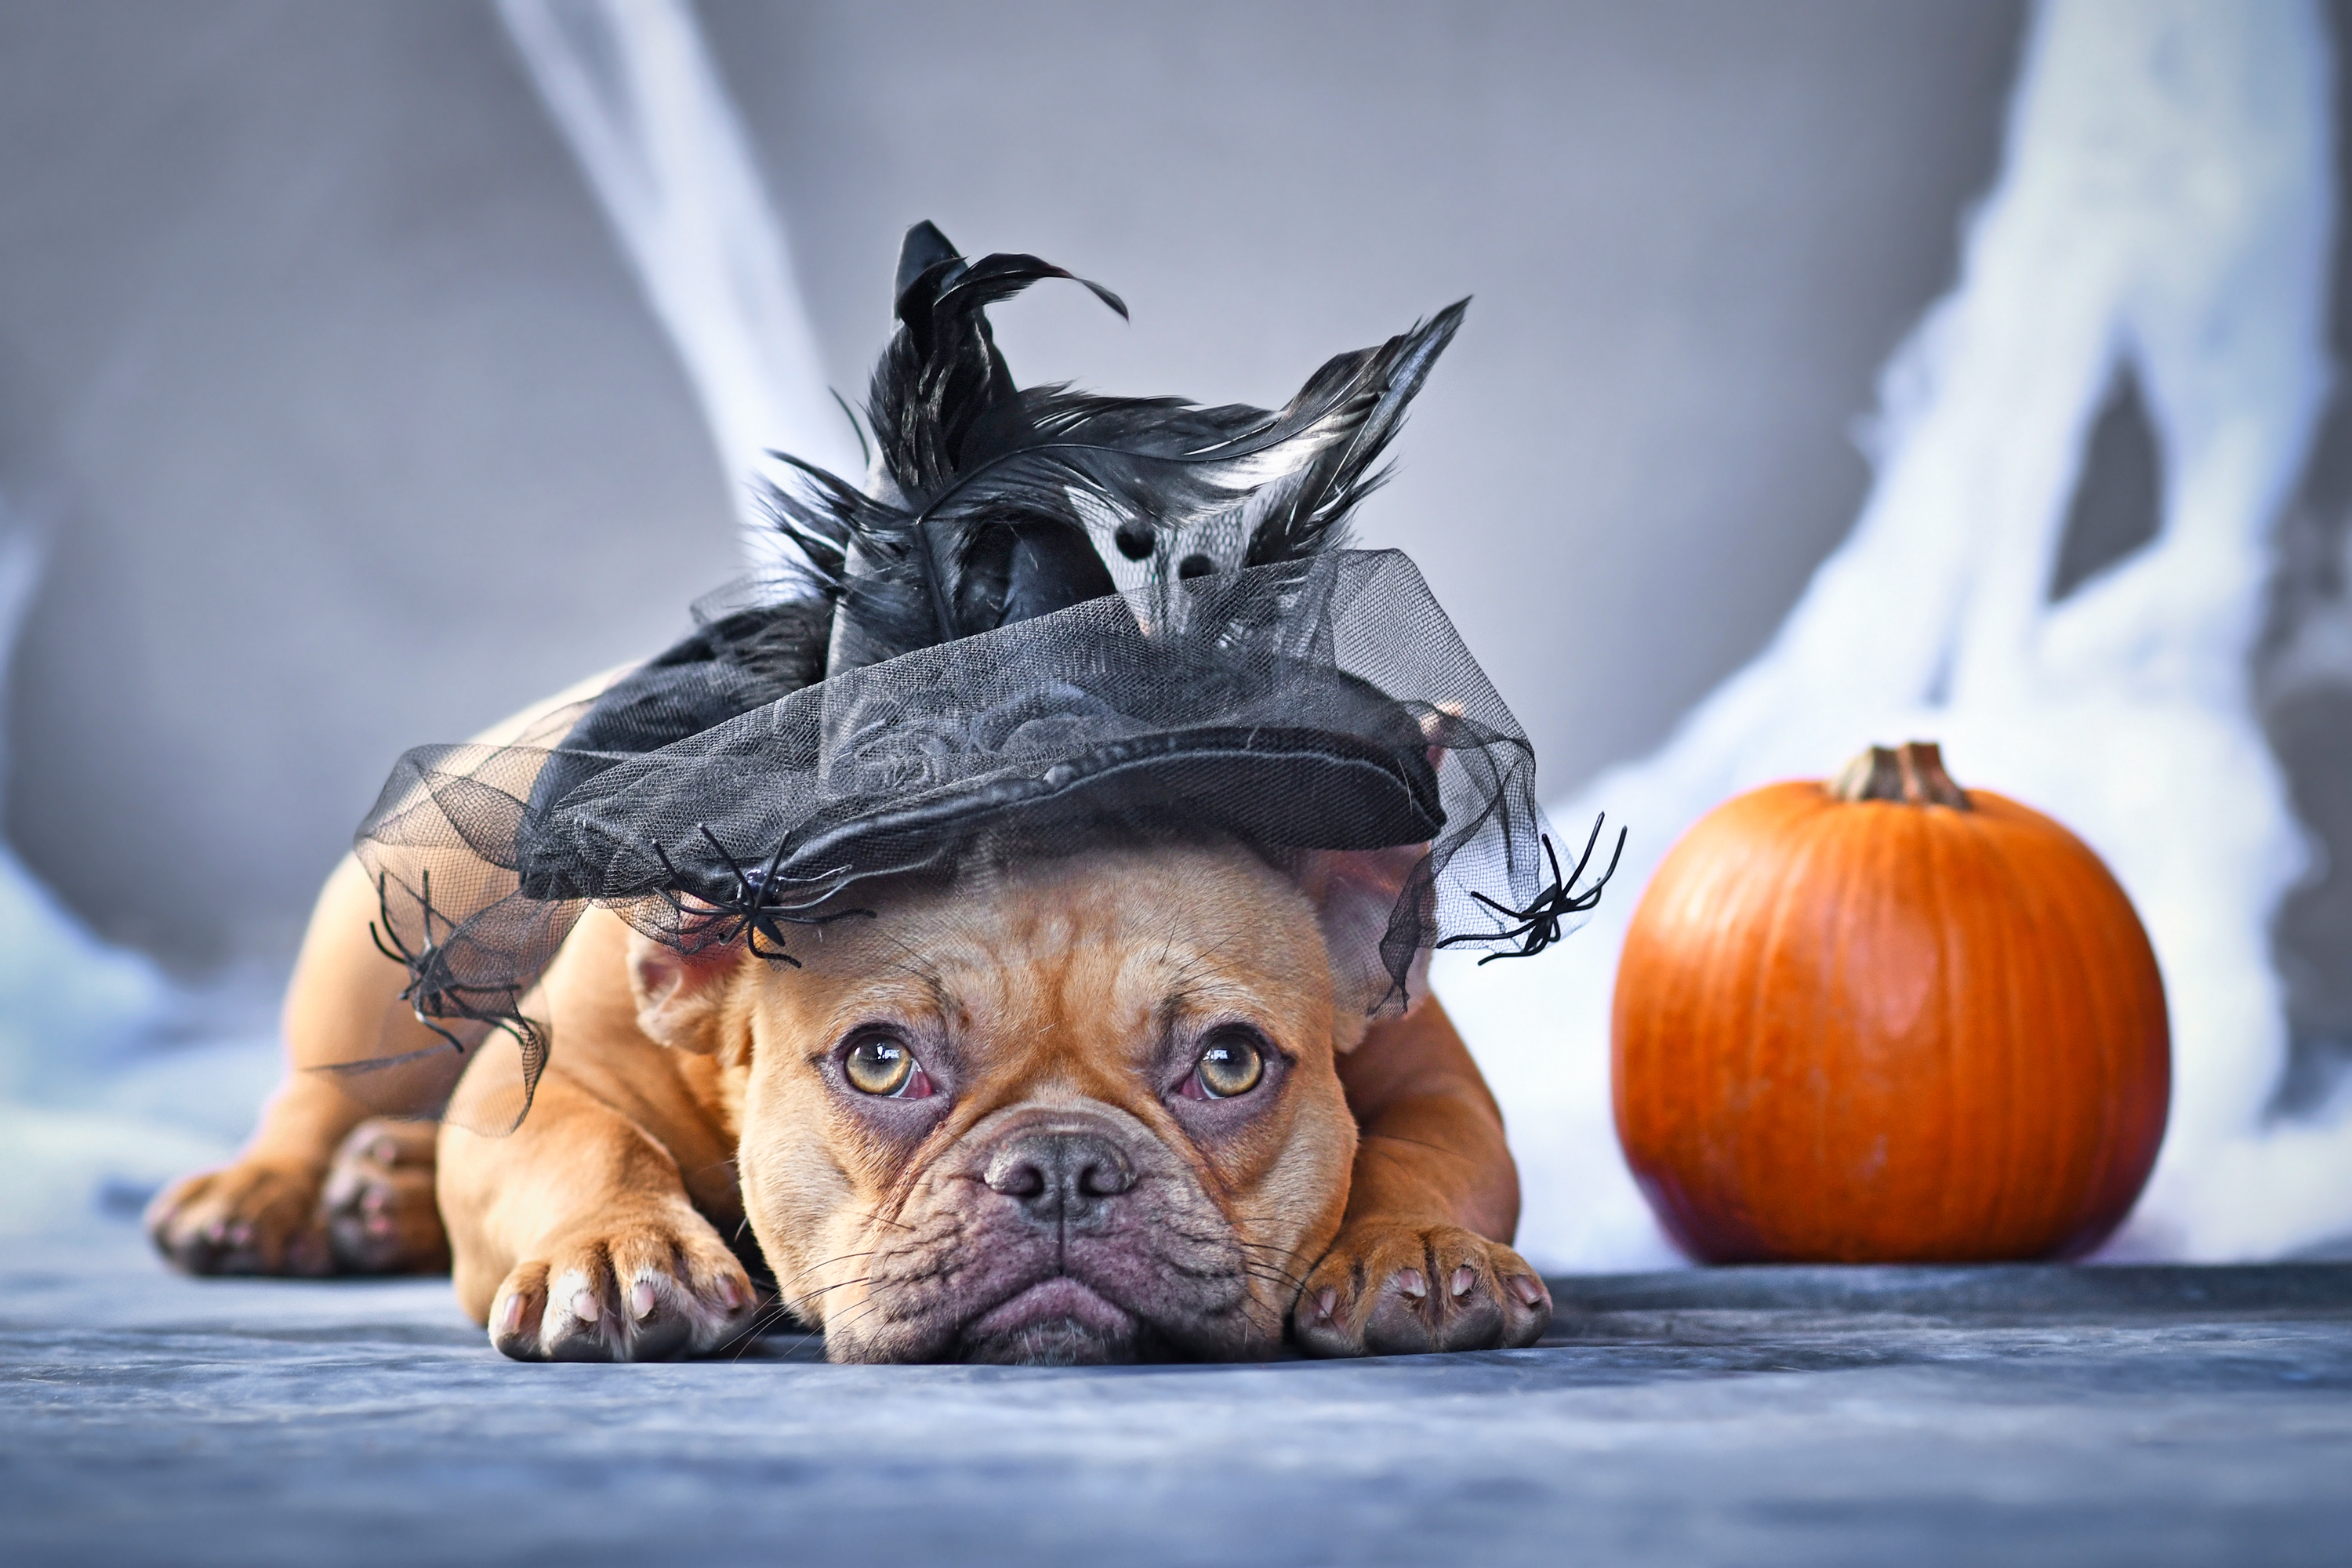 Dog Halloween Costumes: Cute No-Sew DIY Ideas